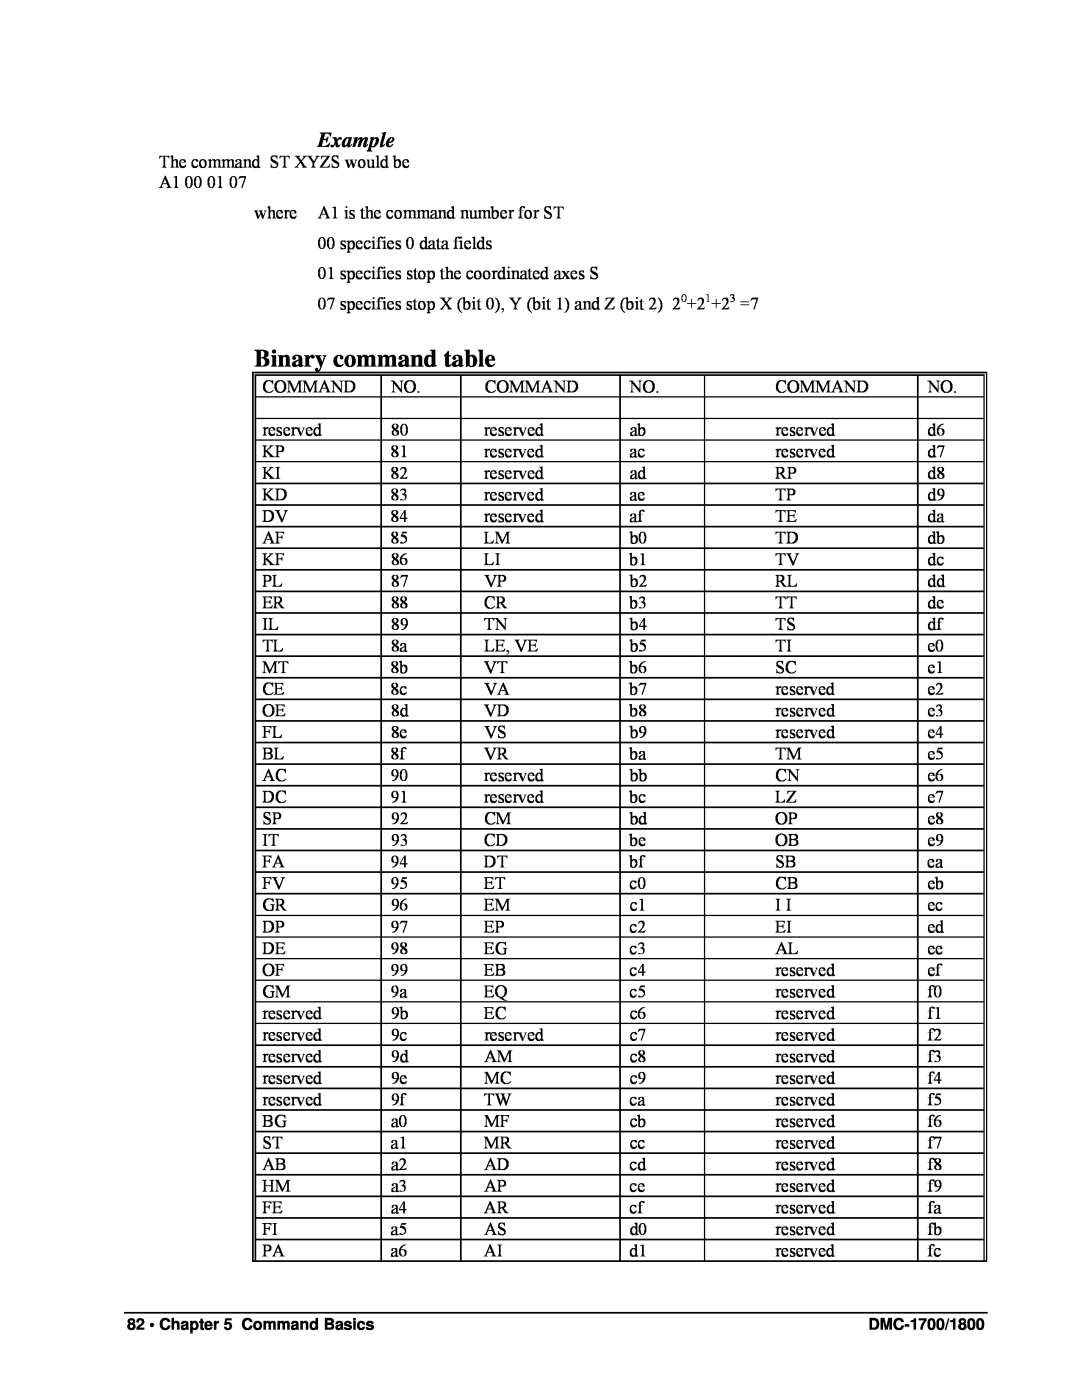 Galil DMC-1800, DMC-1700 user manual Binary command table, Example 